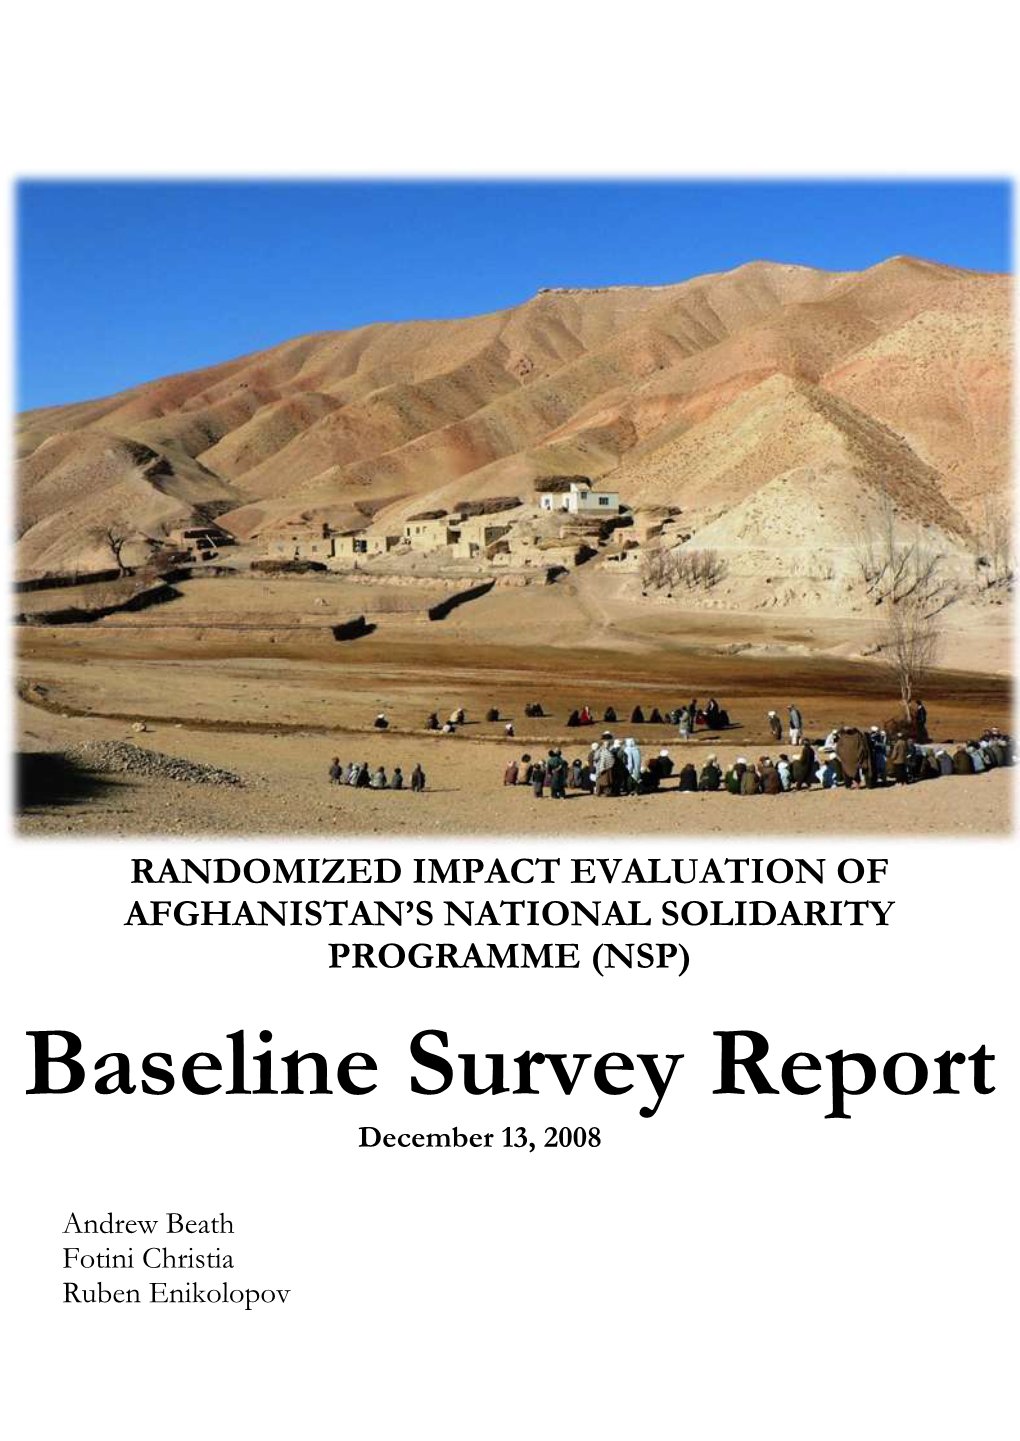 Baseline Survey Report December 13, 2008